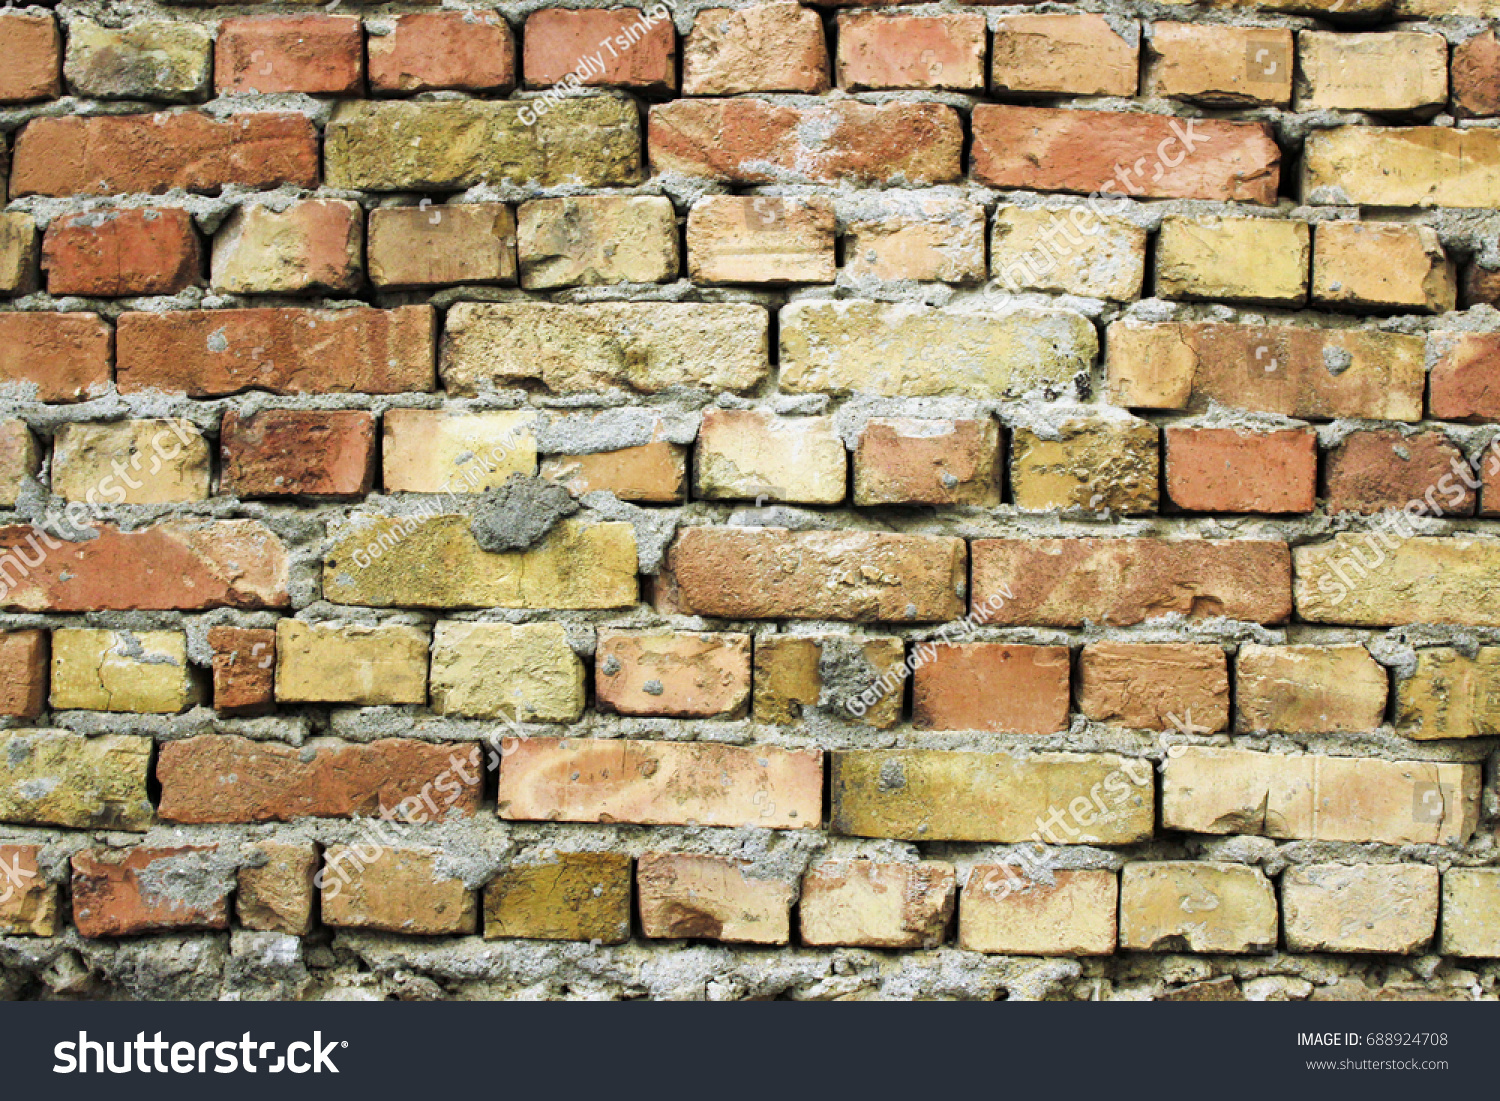 Colored brick wall #688924708